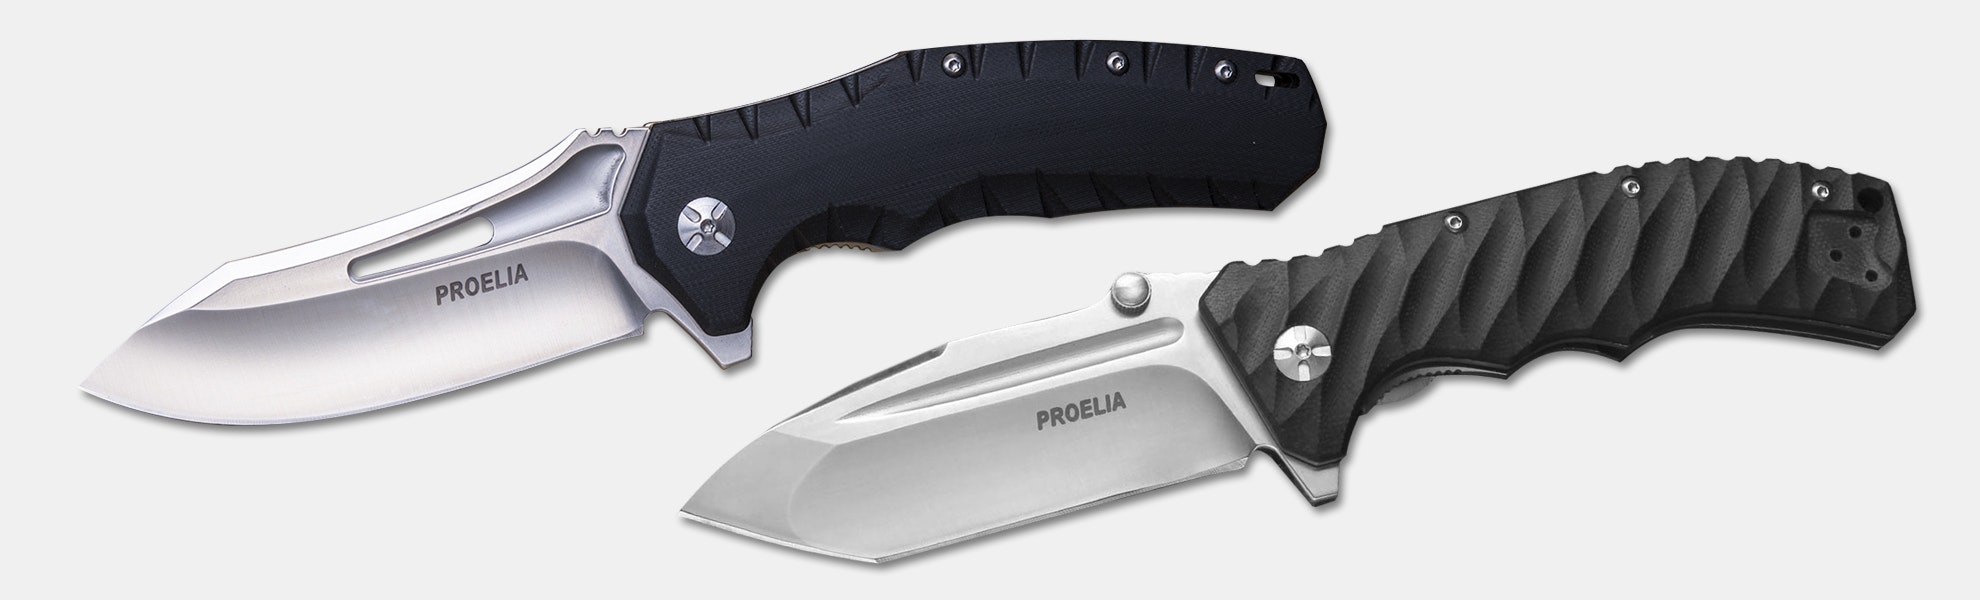 proelia knives drop point